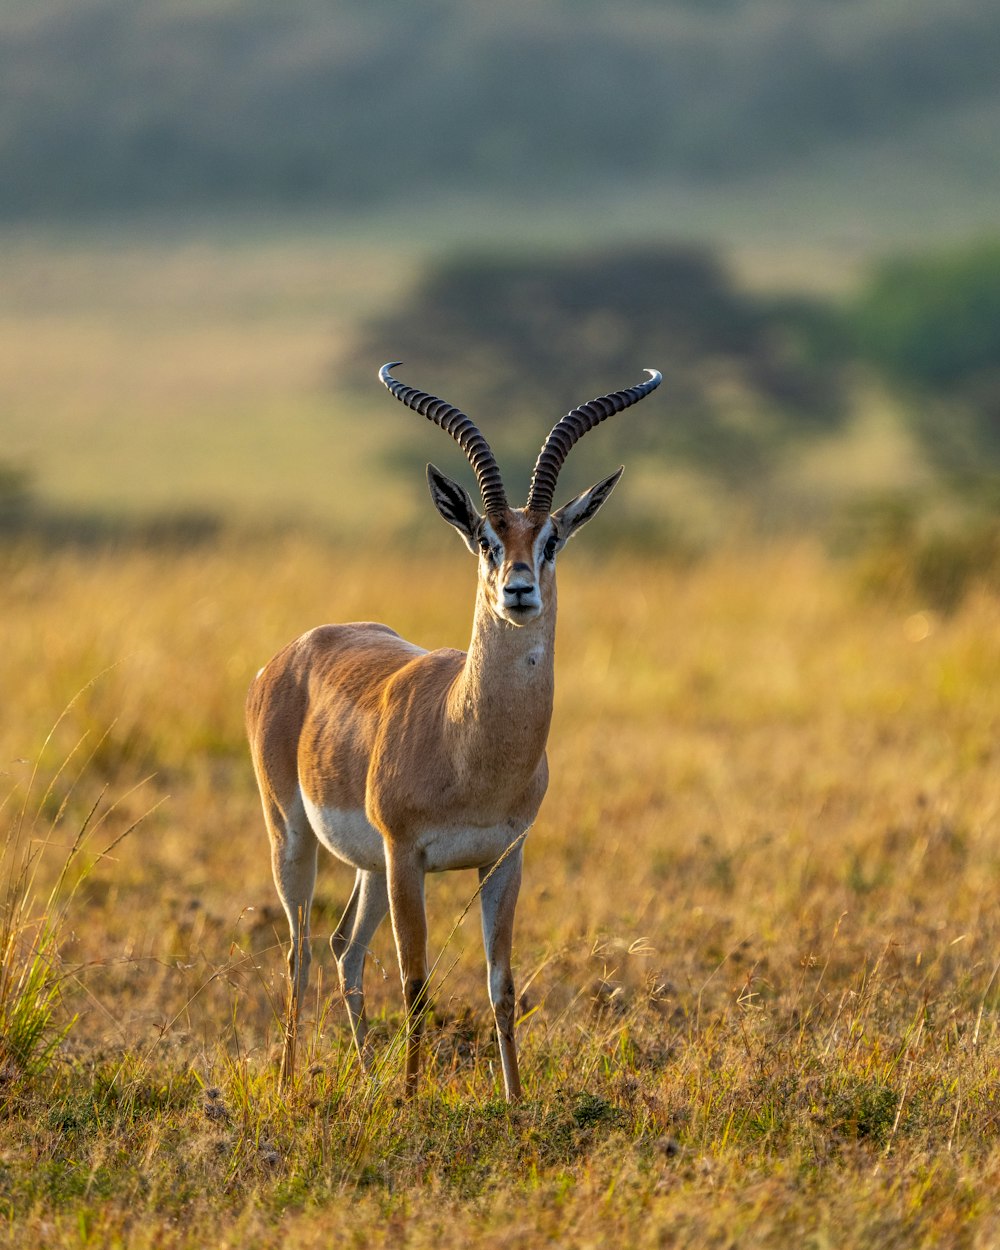 an antelope standing in a field of grass